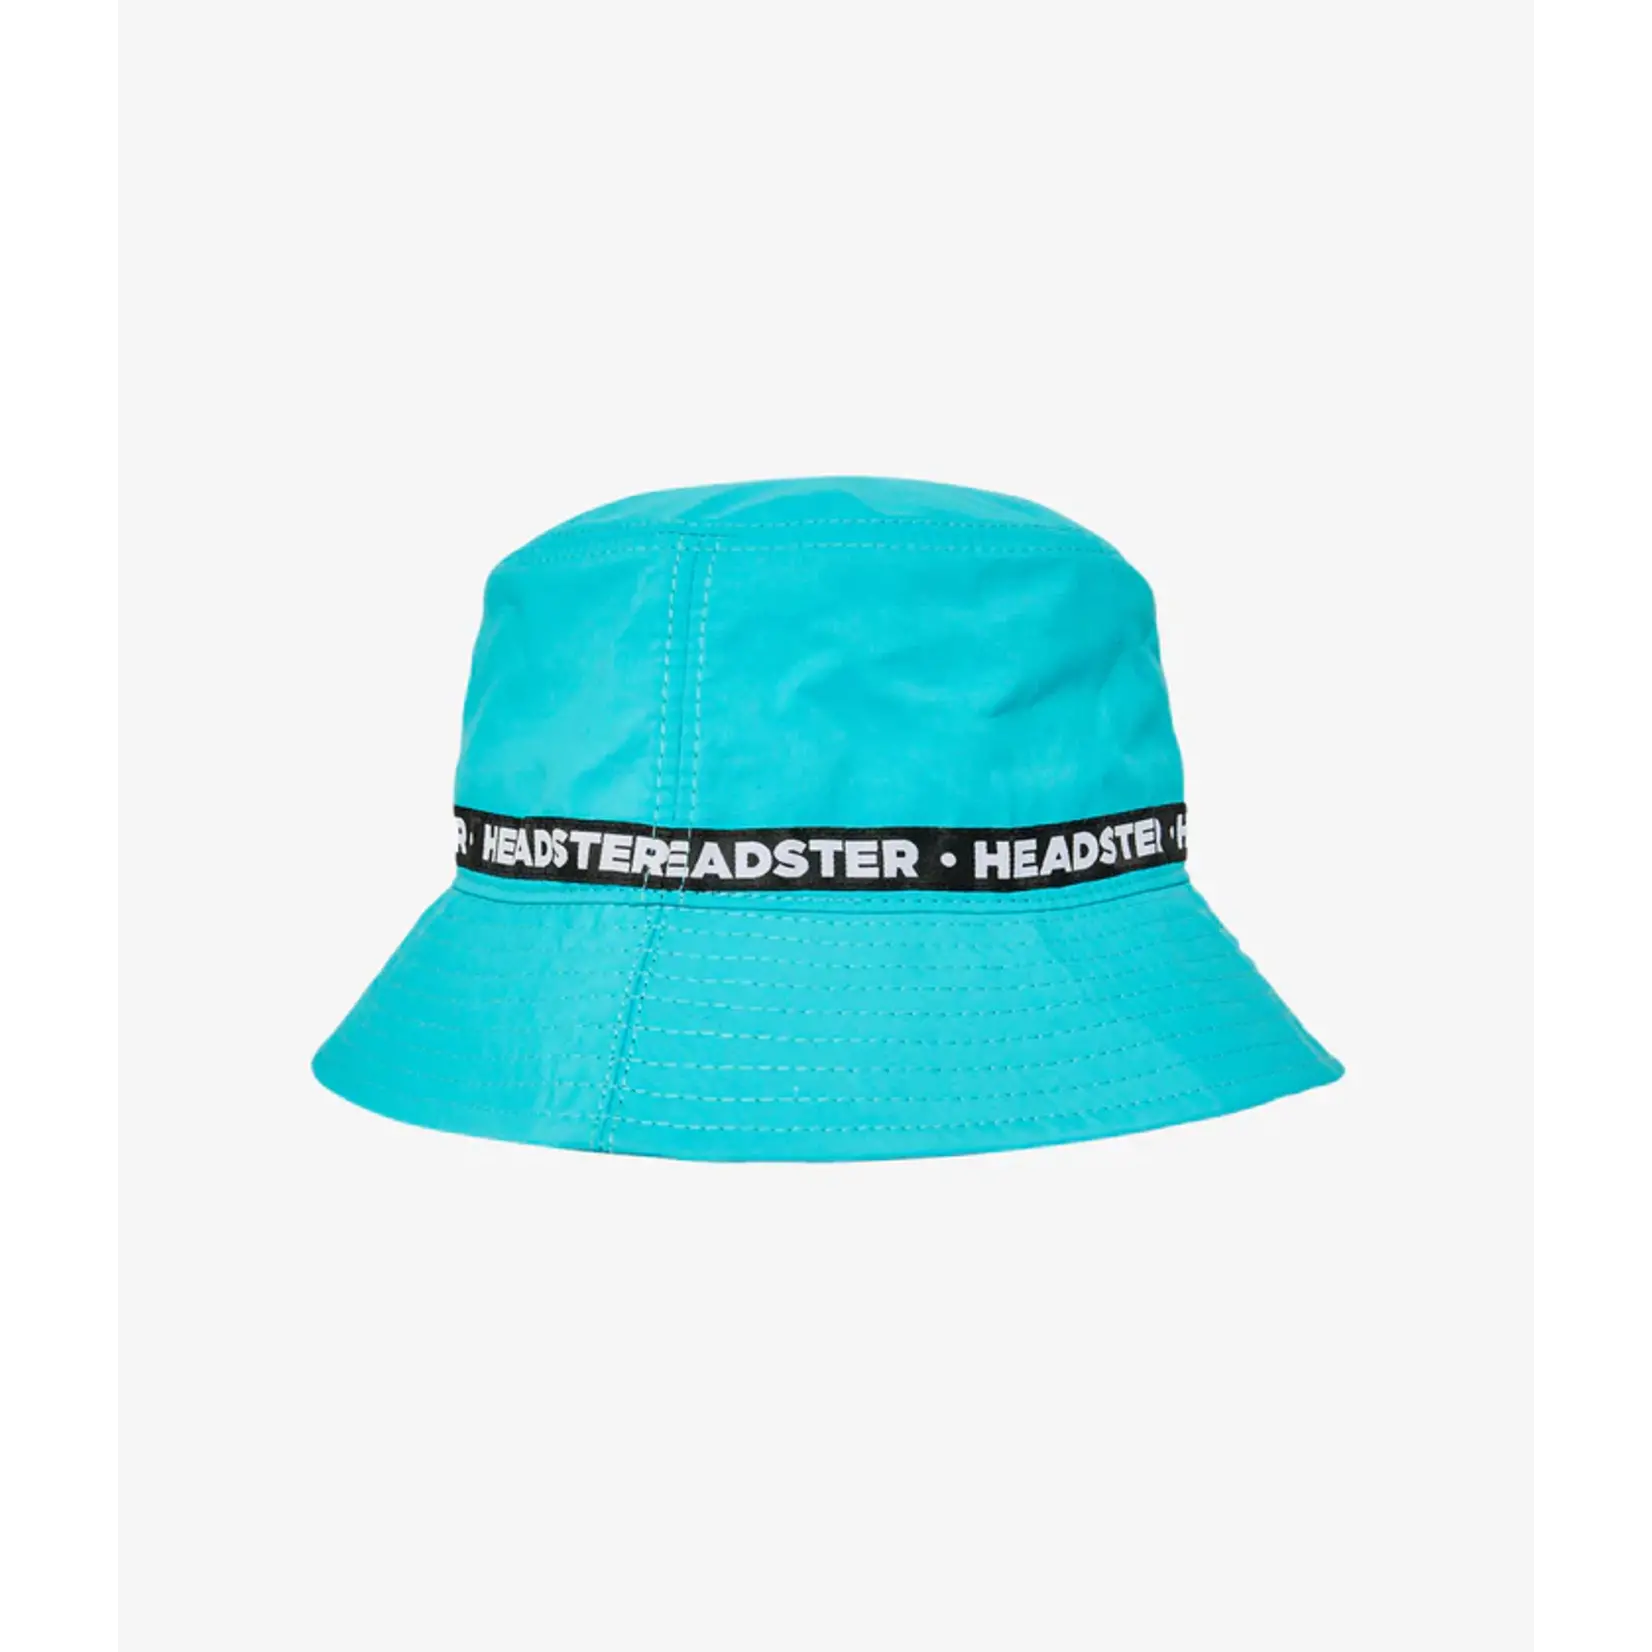 Headster Headster Safari Turquoise Aqua sea